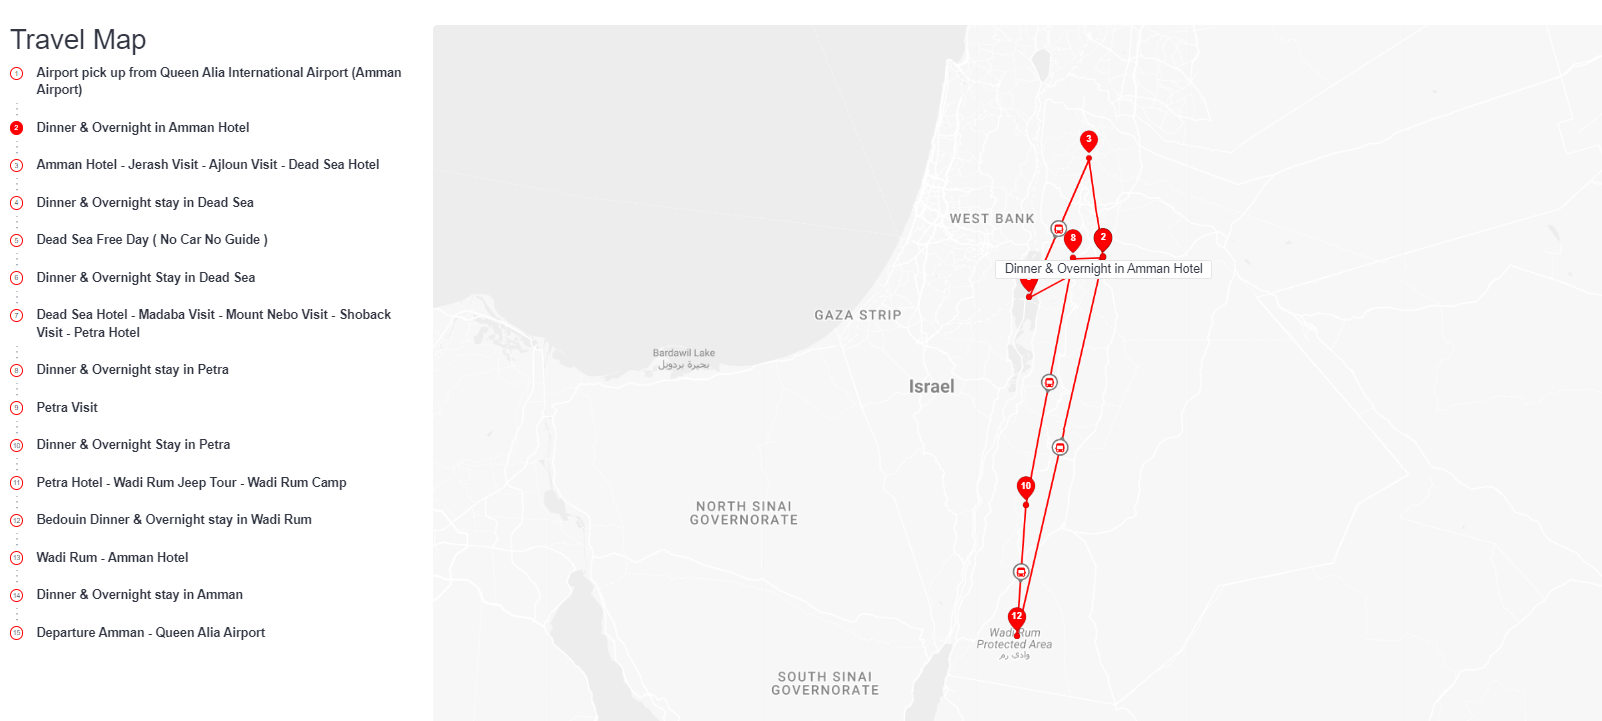 tourhub | Travco Jordan | Adventures of Jordan with 4* accommodation | Tour Map